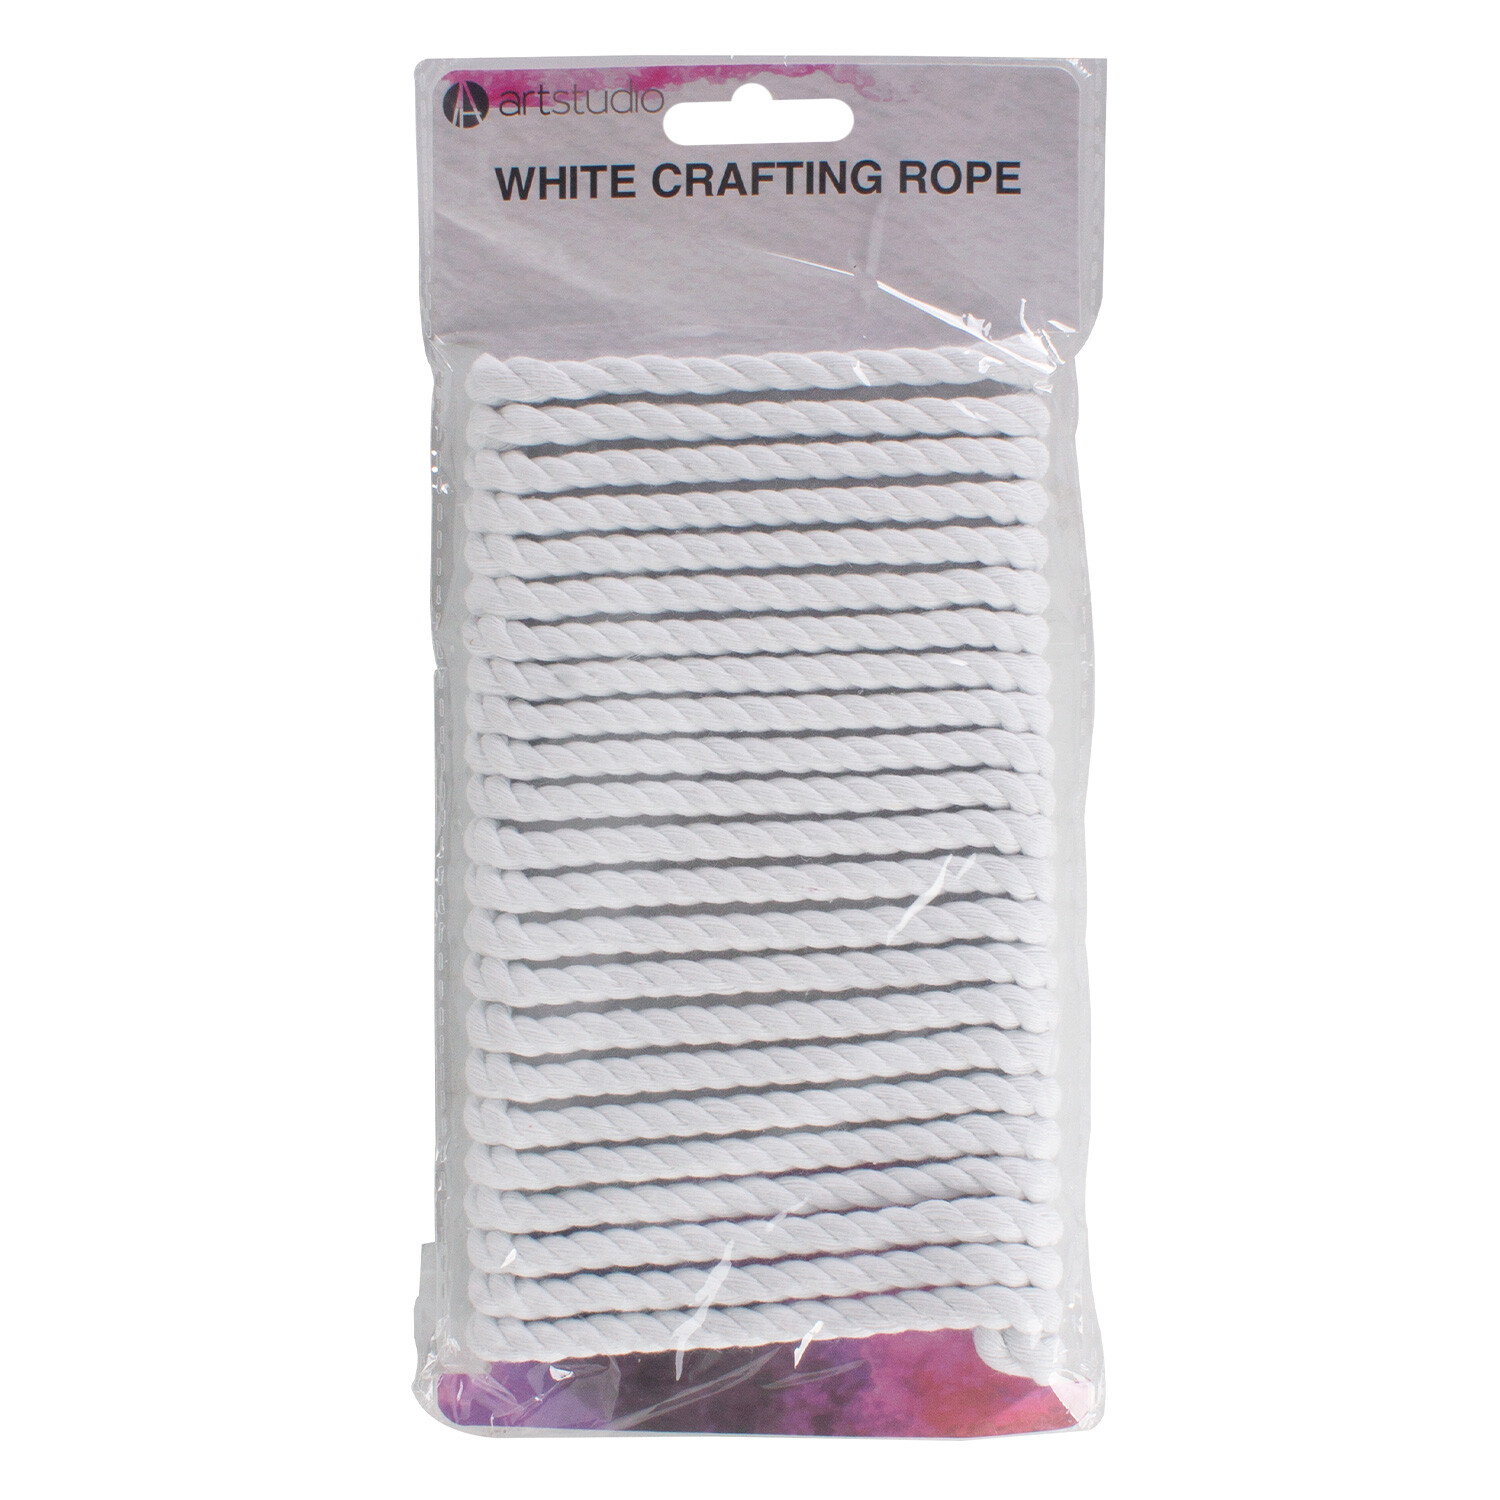 White Crafting Rope - White Image